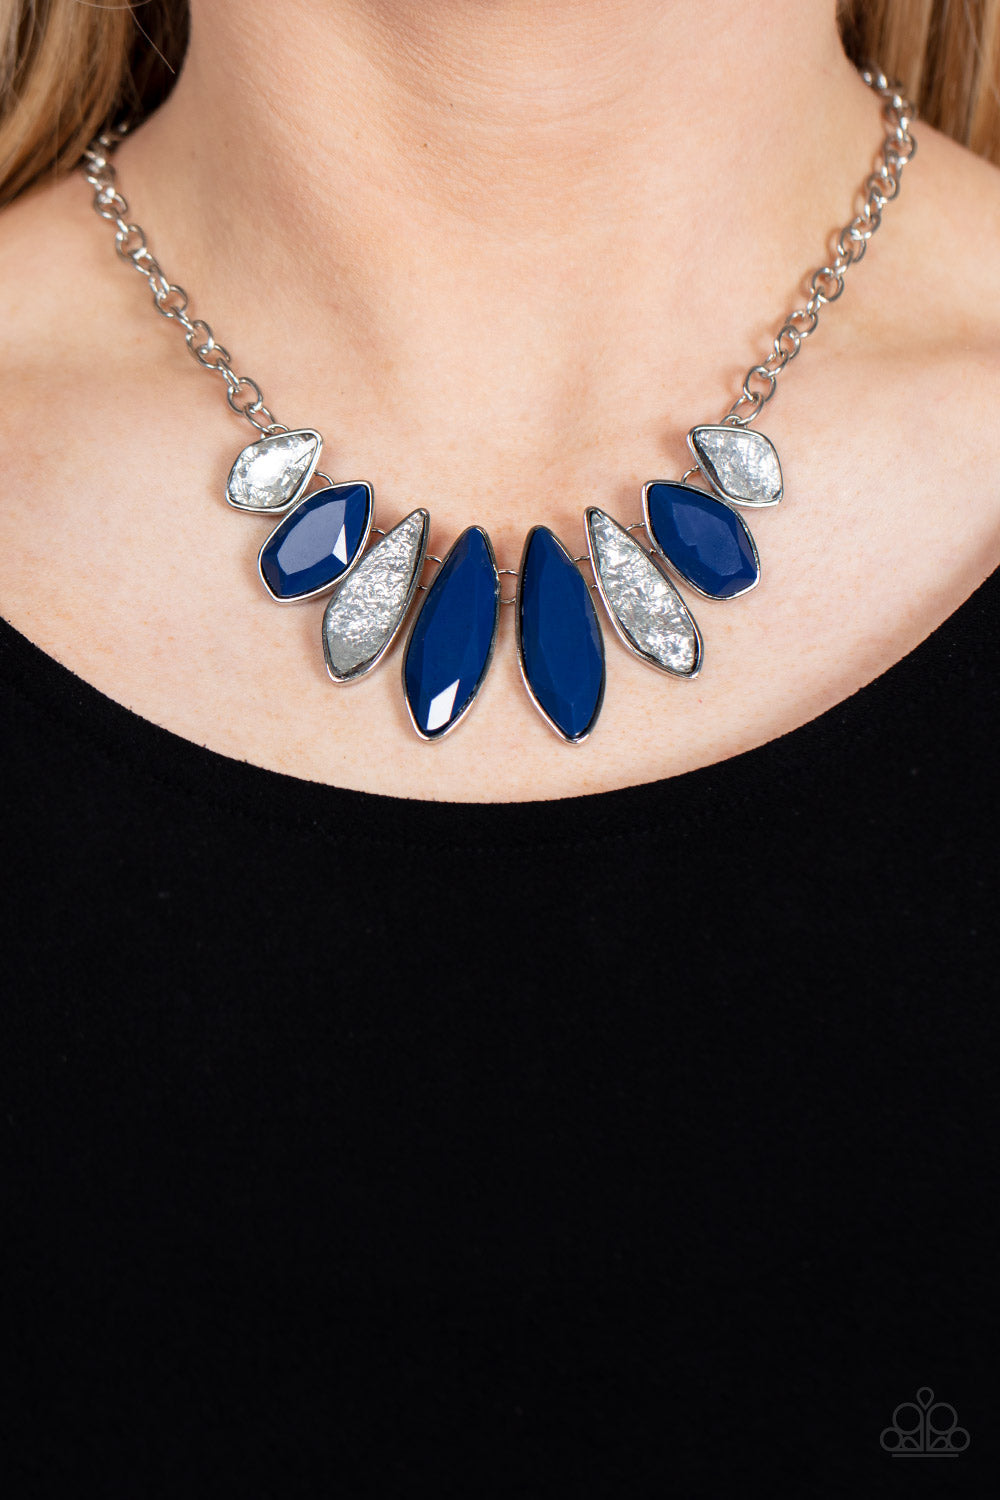 Paparazzi “Crystallized Couture” Blue Necklace Earring Set - Cindysblingboutique